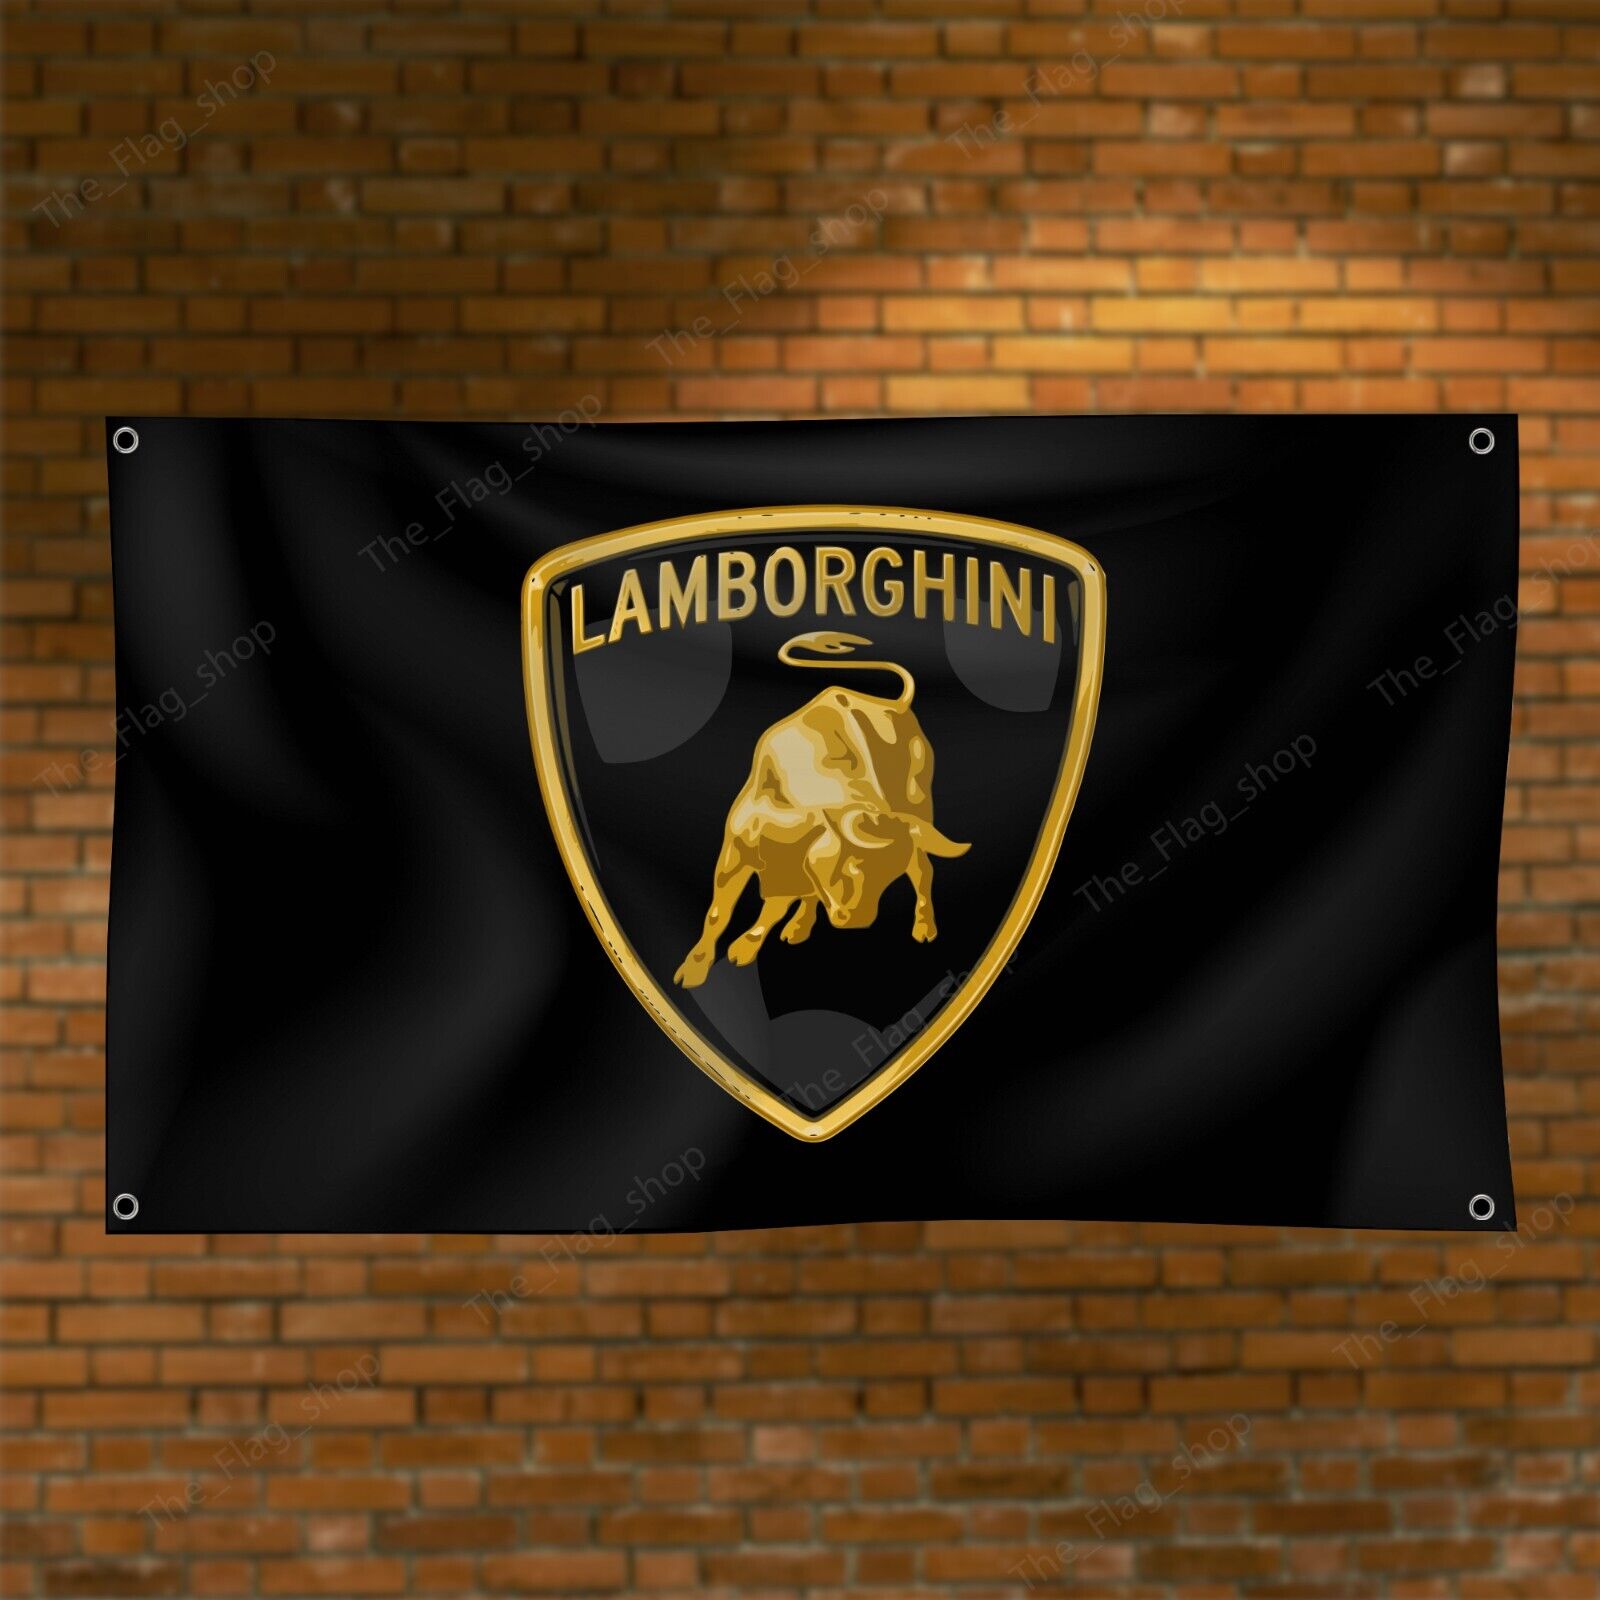 Lamborghini 3x5 ft Black Banner Racing Flags Car Show Garage Man Cave Wall Decor